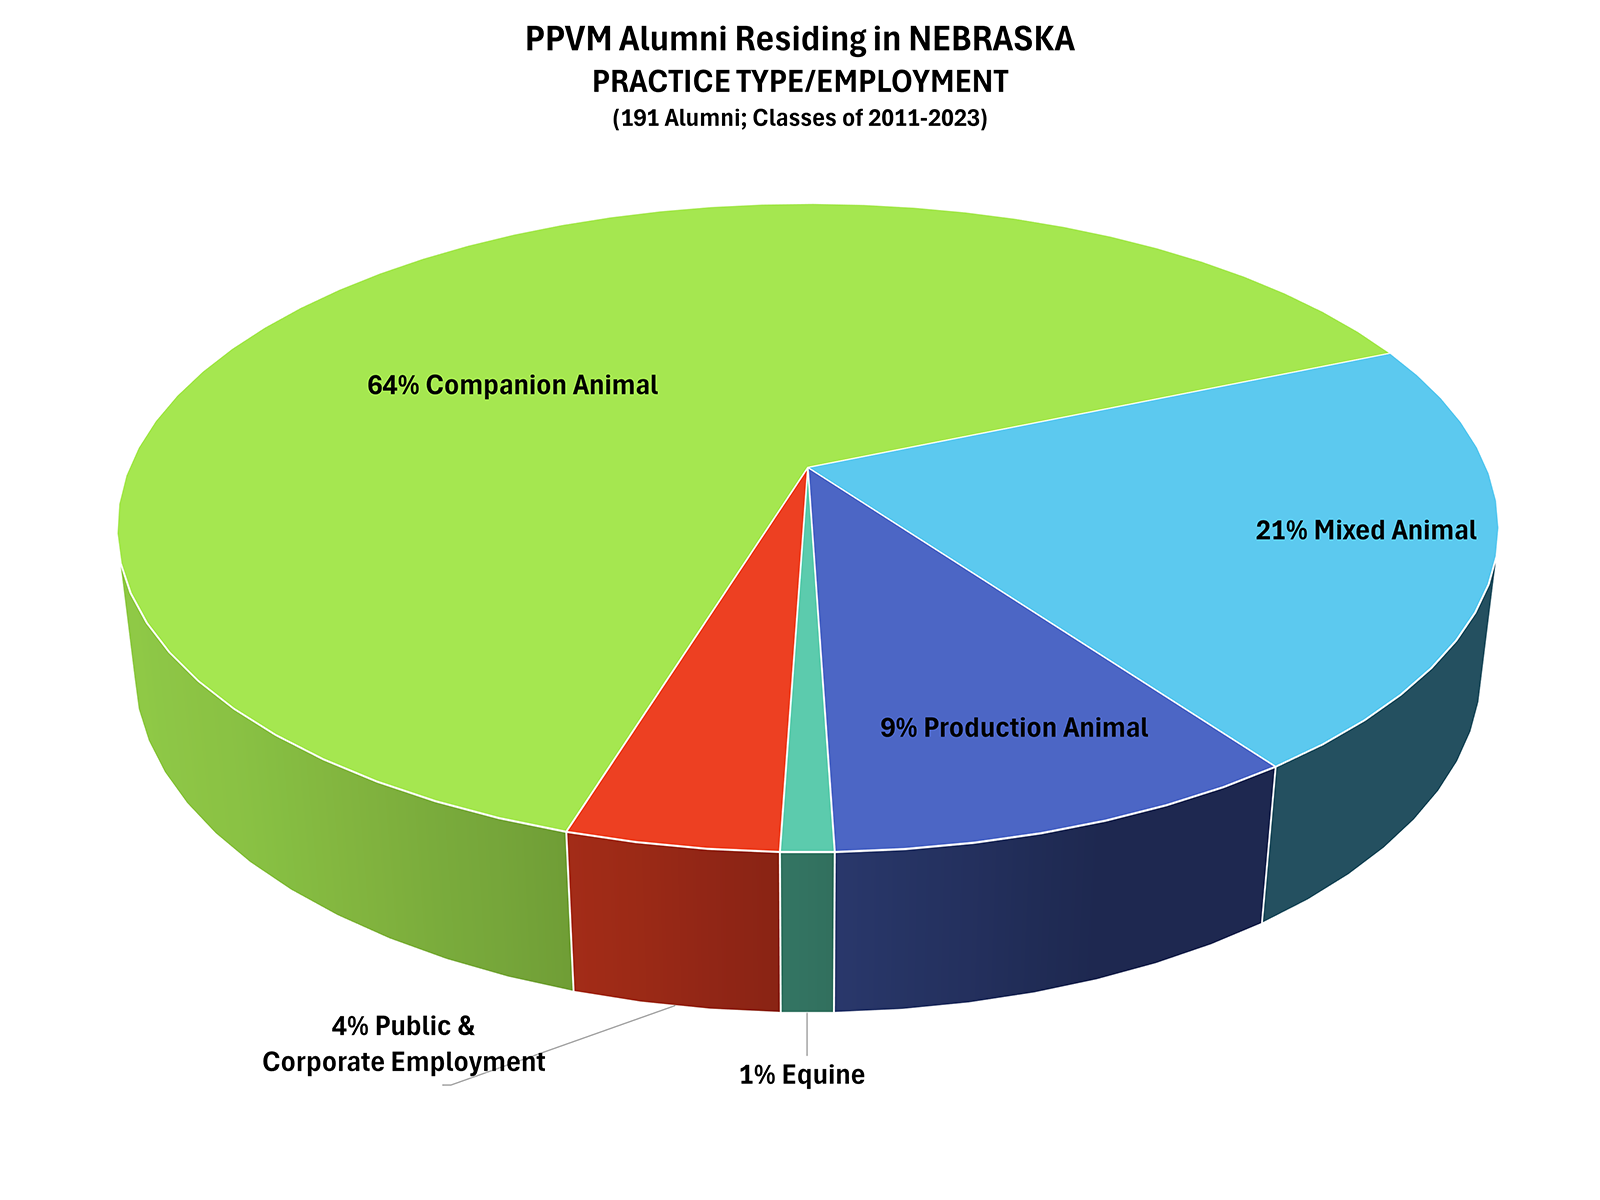 Pie chart showing distribution of practice type for PPVM Alumni practicing in Nebraska